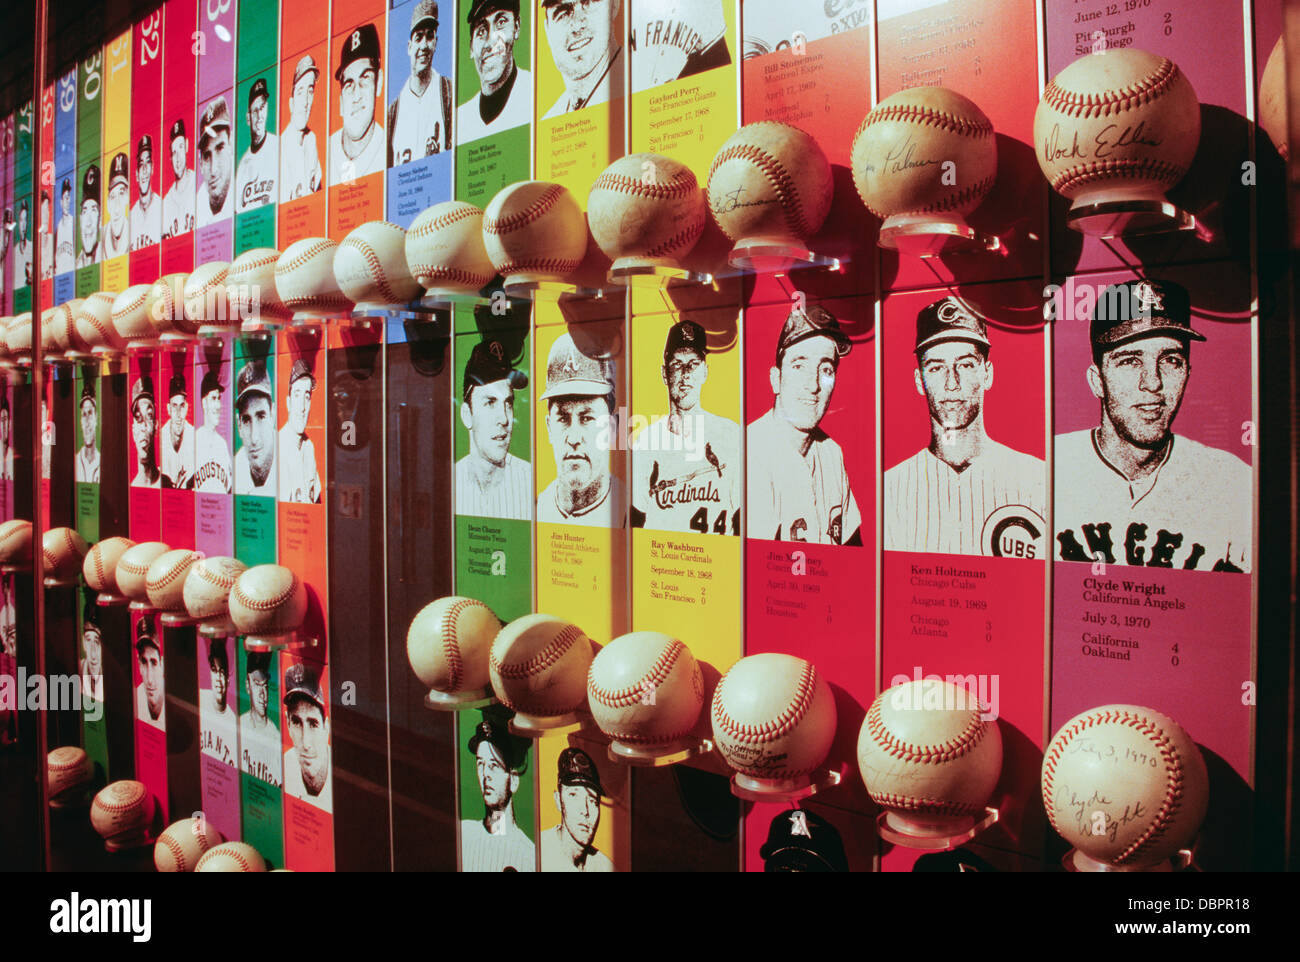 National Baseball Hall of Fame, no hit giochi, brocche e Baseballs presentano, Cooperstown, NY Foto Stock